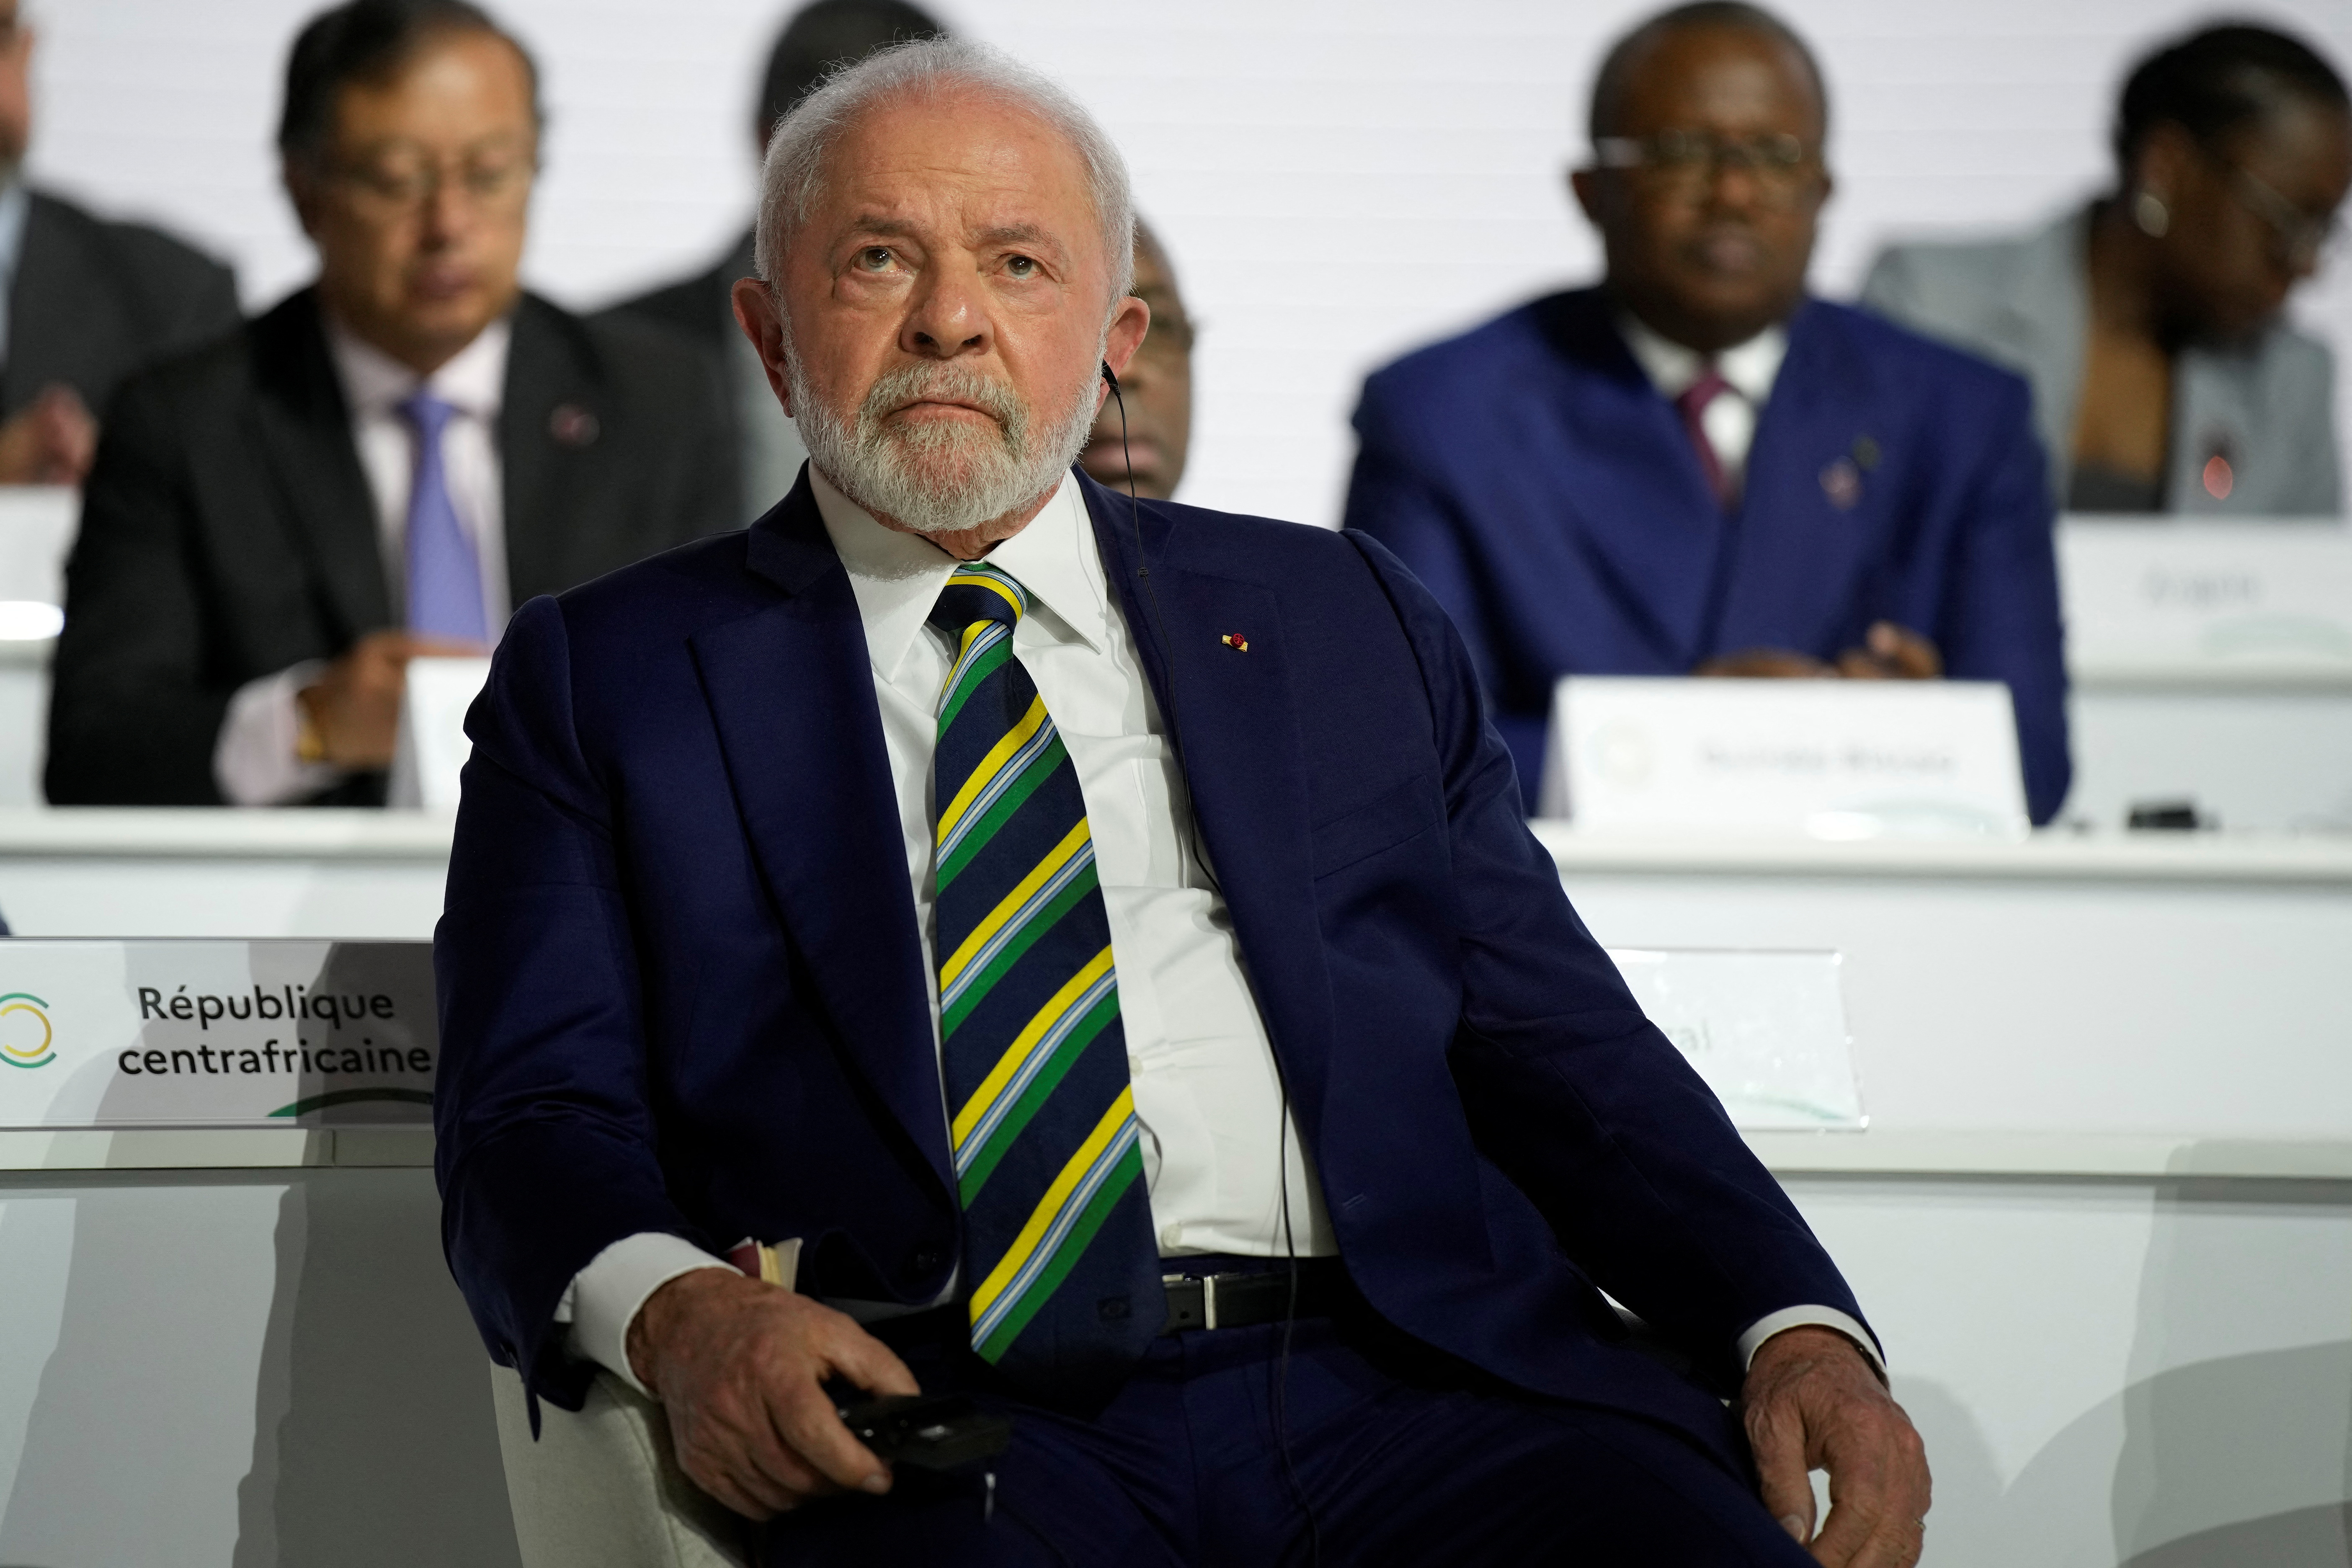 Surging support for Brazil's Lula da Silva unnerves markets